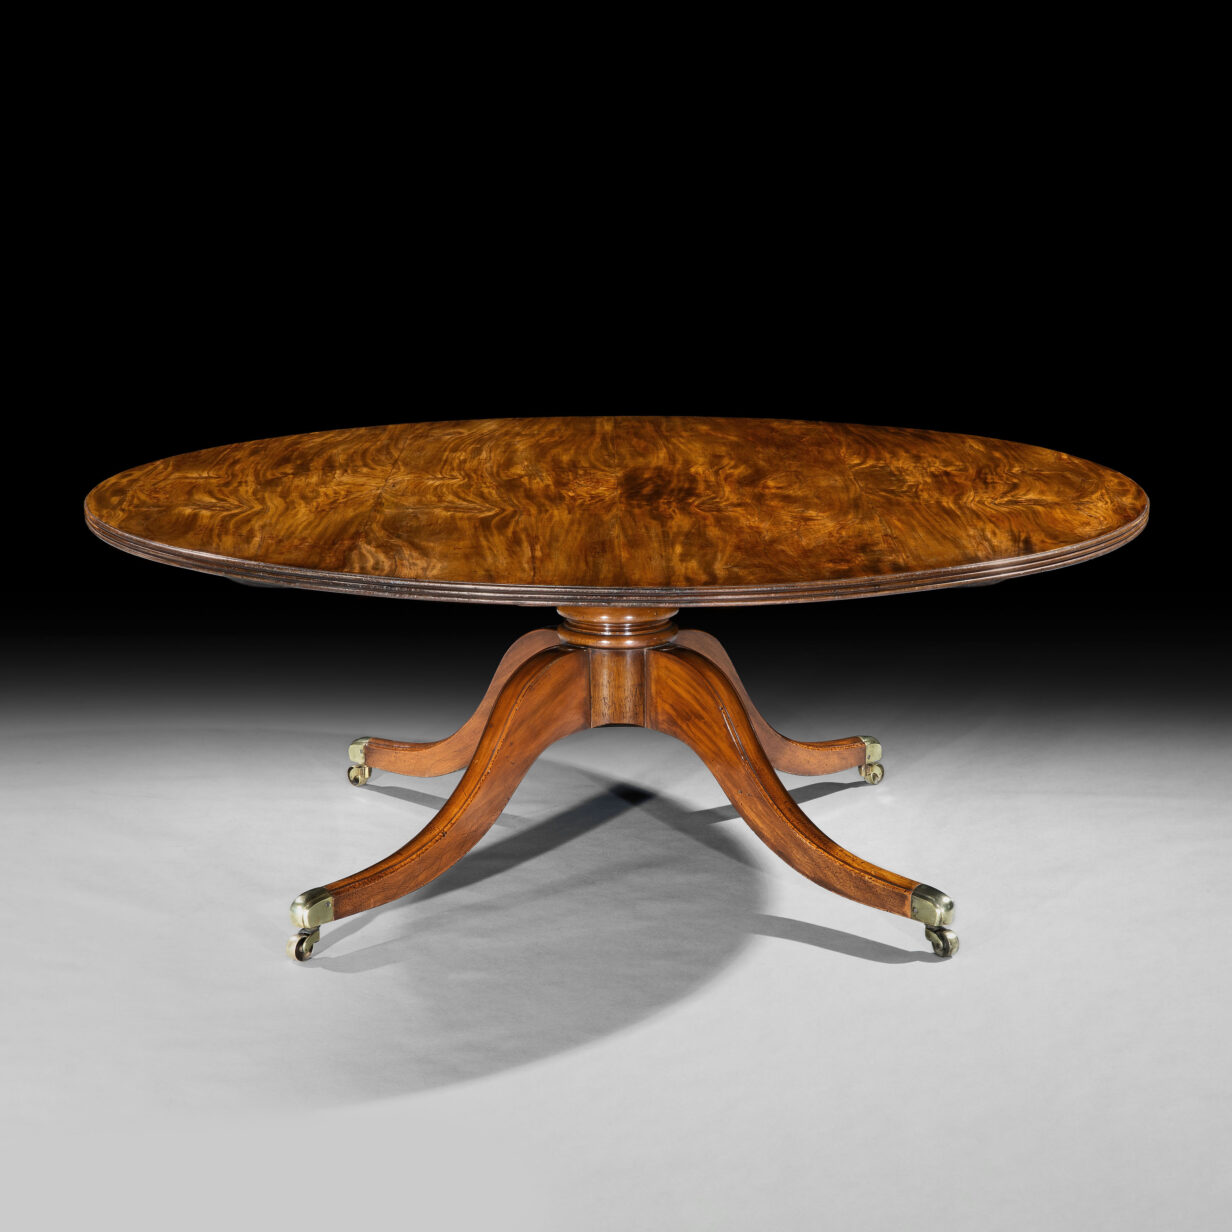 Large regency circular dining table